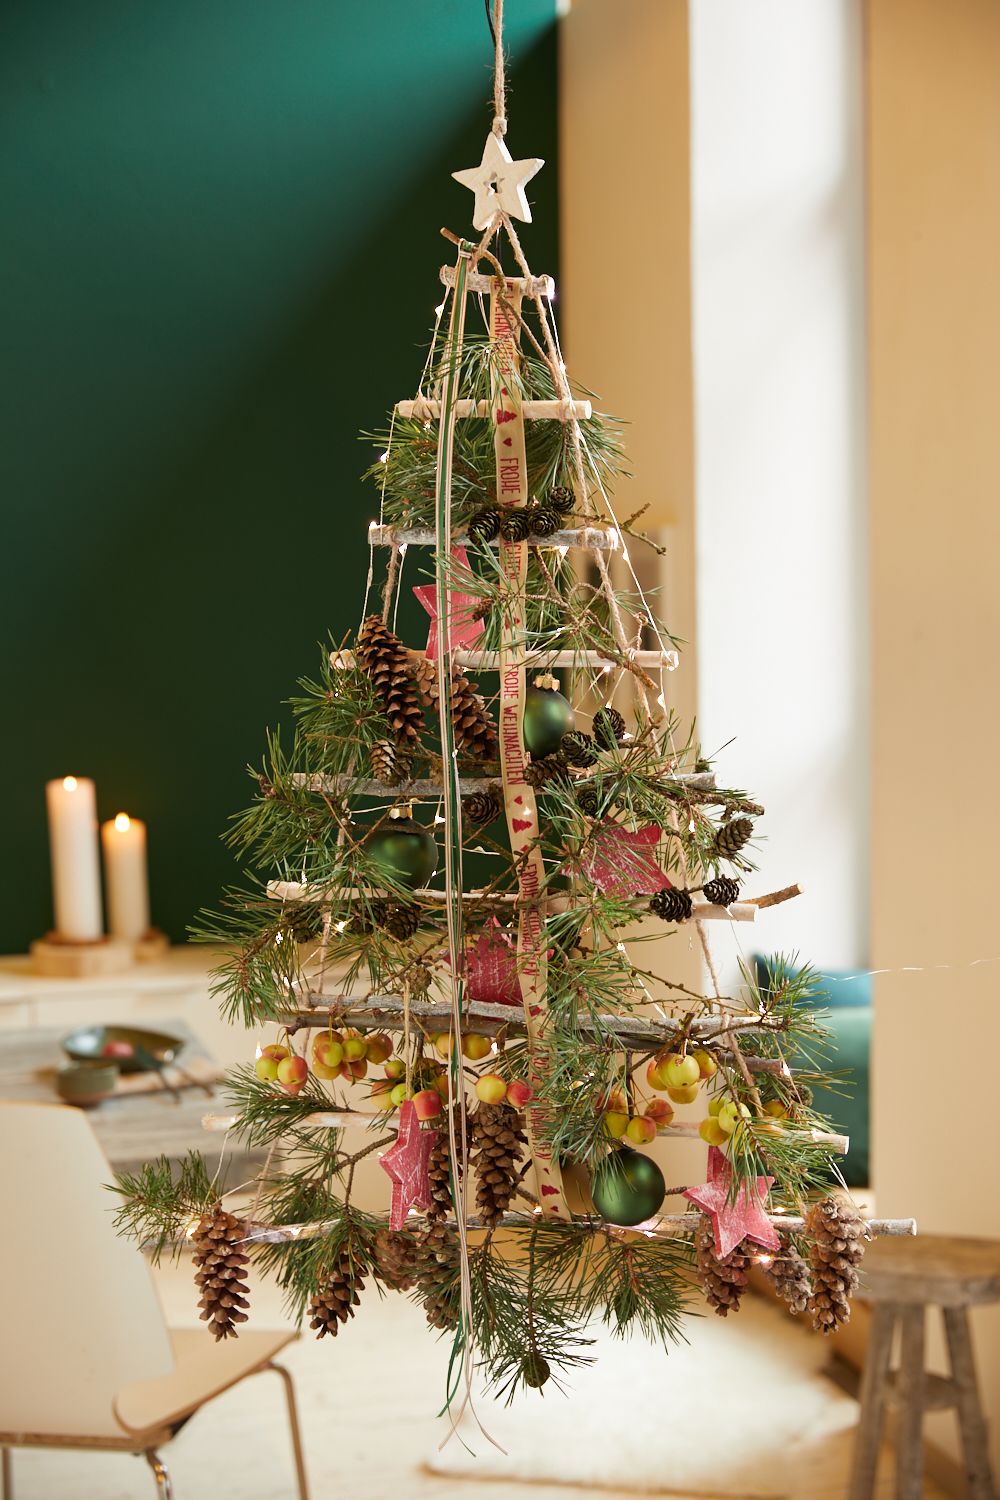 BLOOM's Christmas Trend Eco & Creative - Alternative Christmas Trees